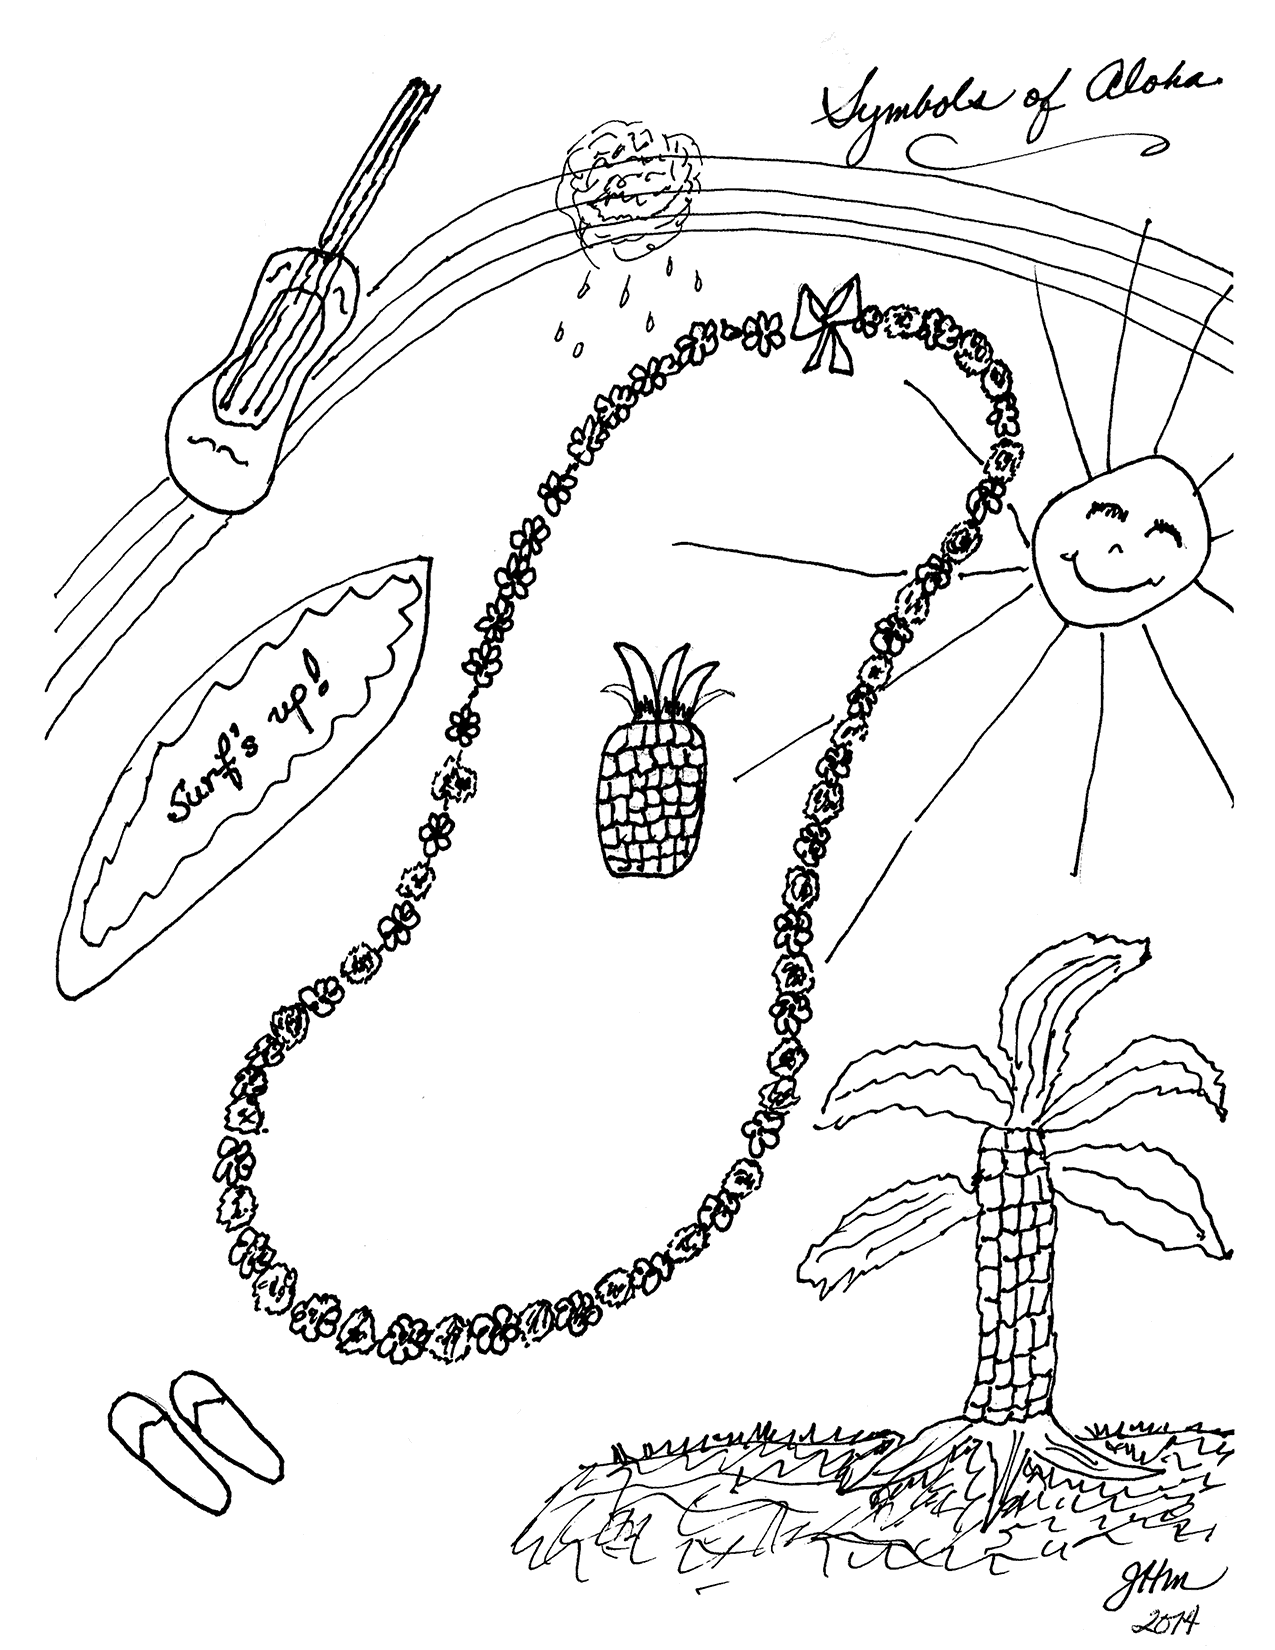 Symbols of Aloha